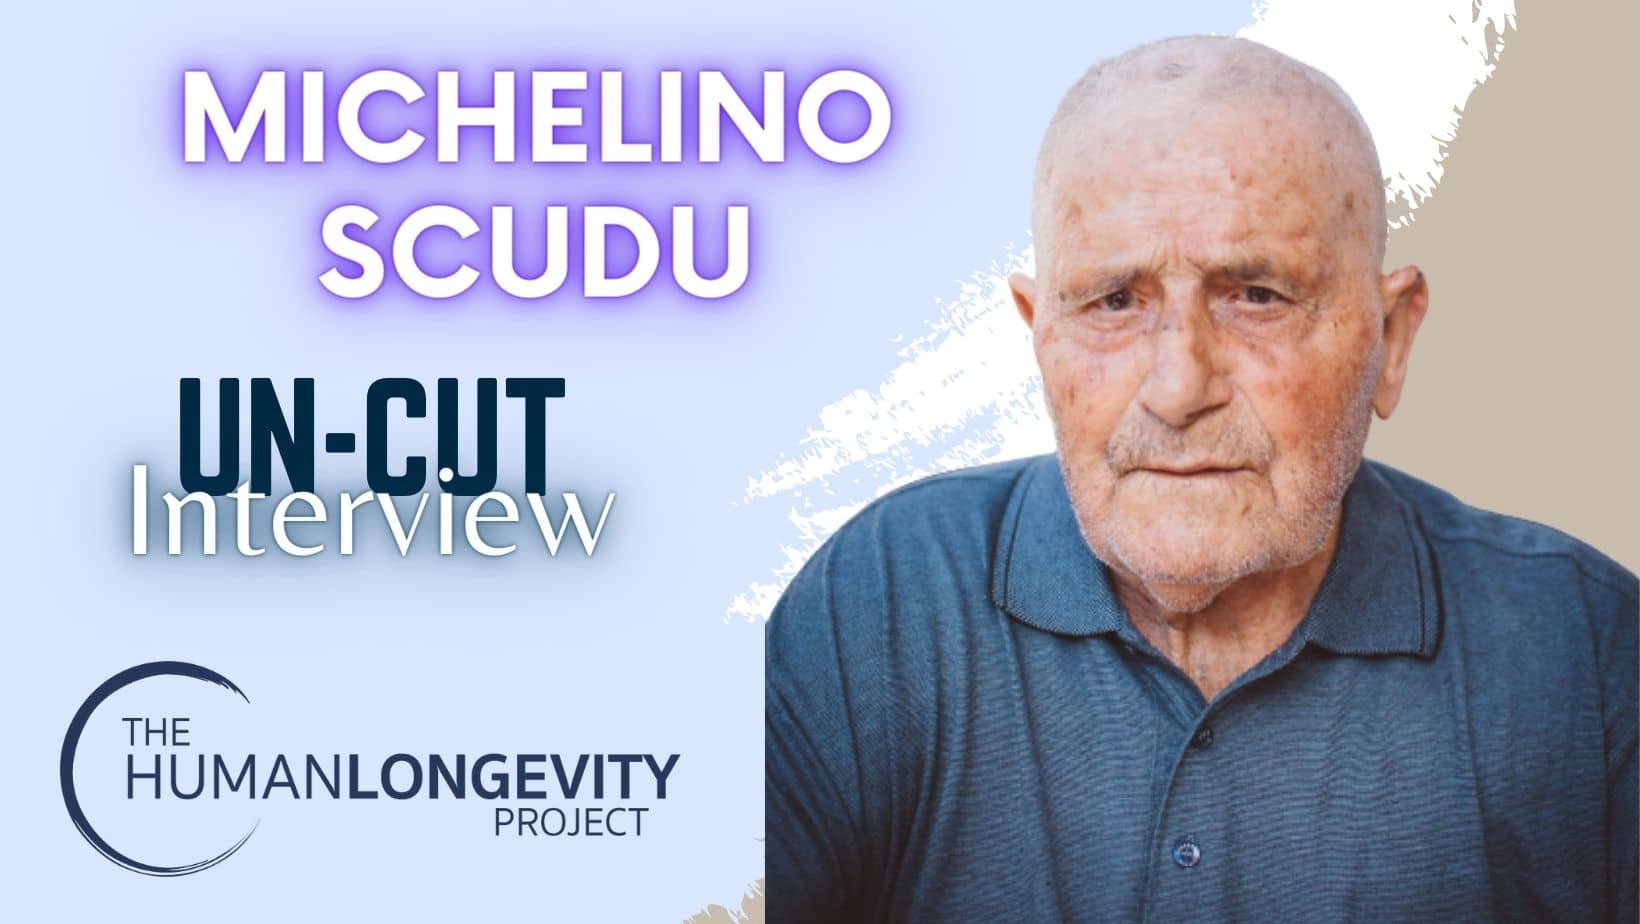 Human Longevity Project Uncut Interview With Michelino Scudu